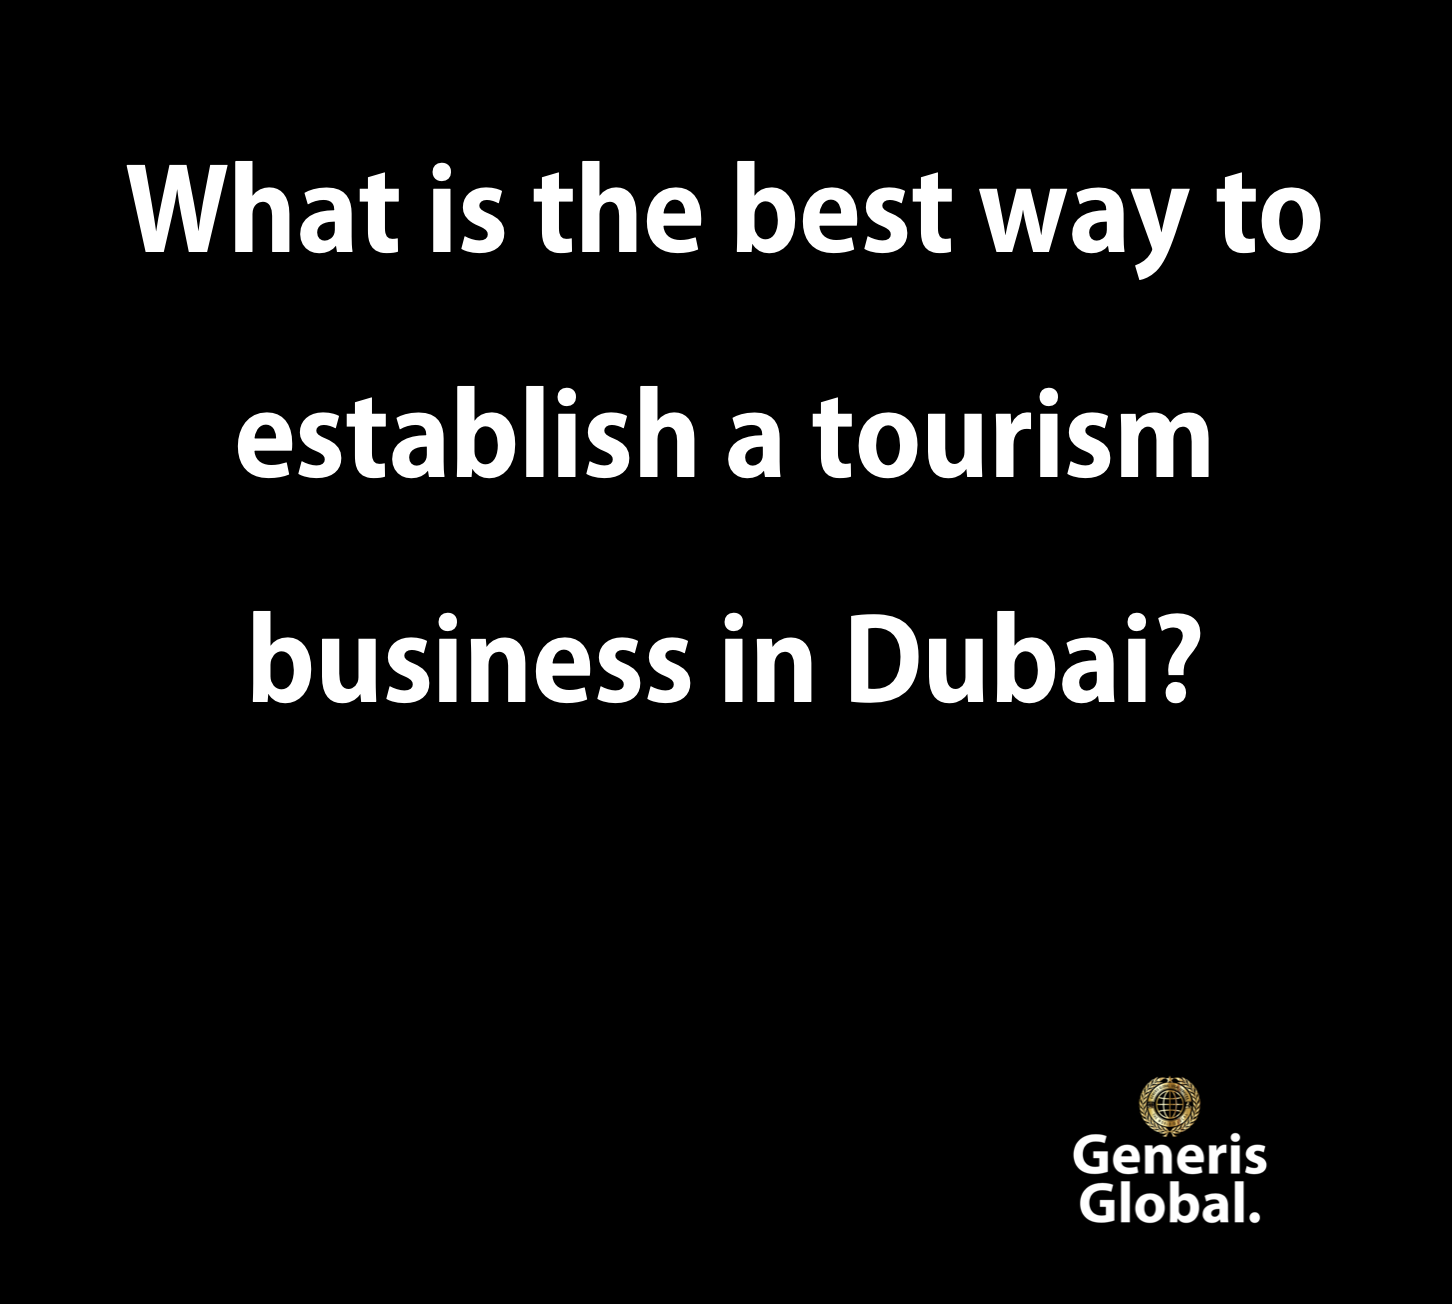 best way to establish a tourism business in Dubai